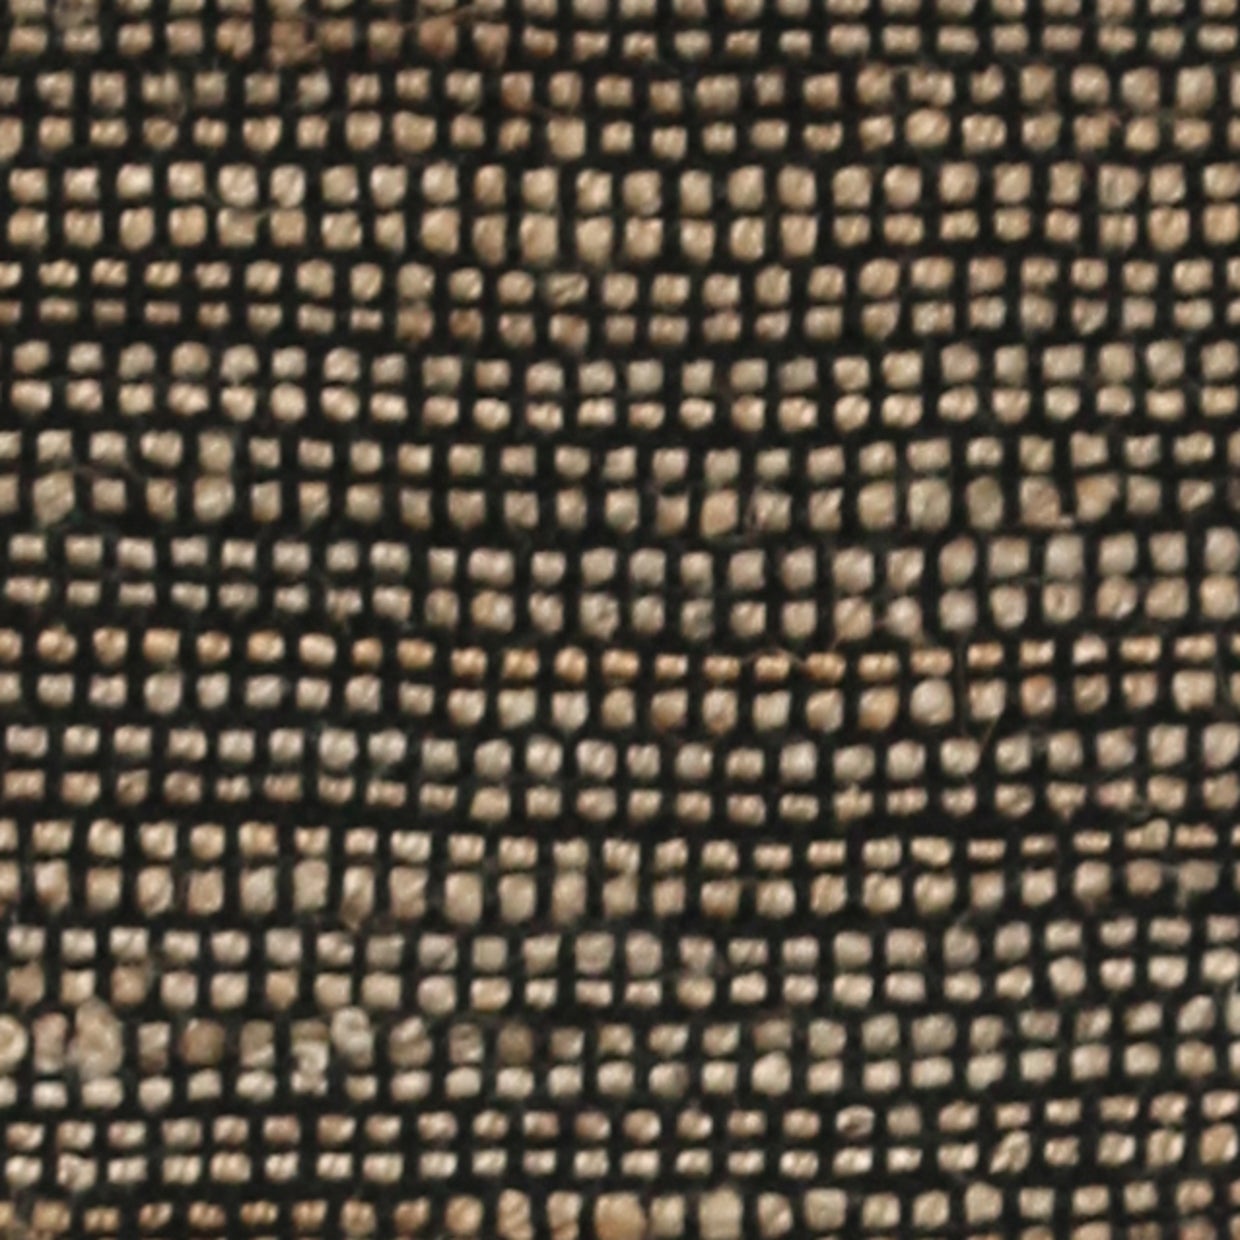 Cuba Natural/Black Textural Jute/Cotton Rug 1800L x 1200W